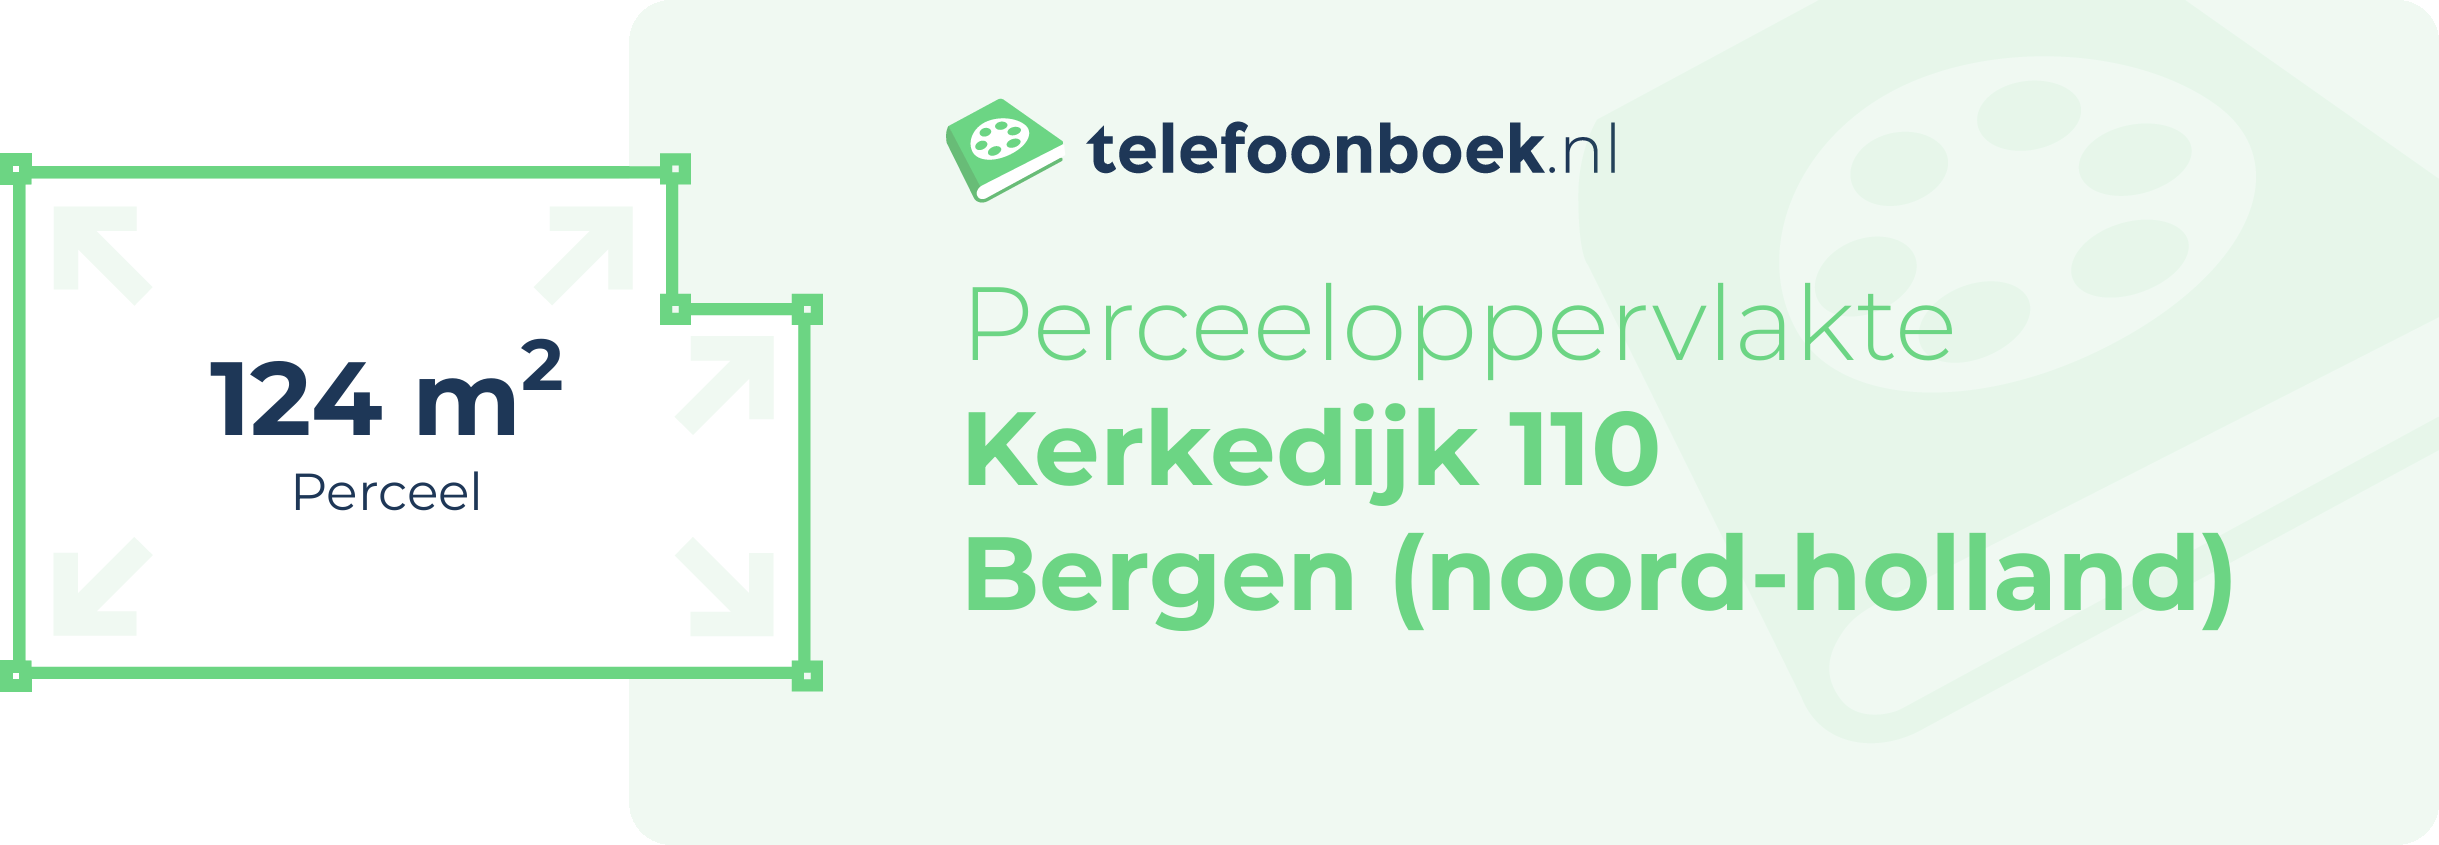 Perceeloppervlakte Kerkedijk 110 Bergen (Noord-Holland)